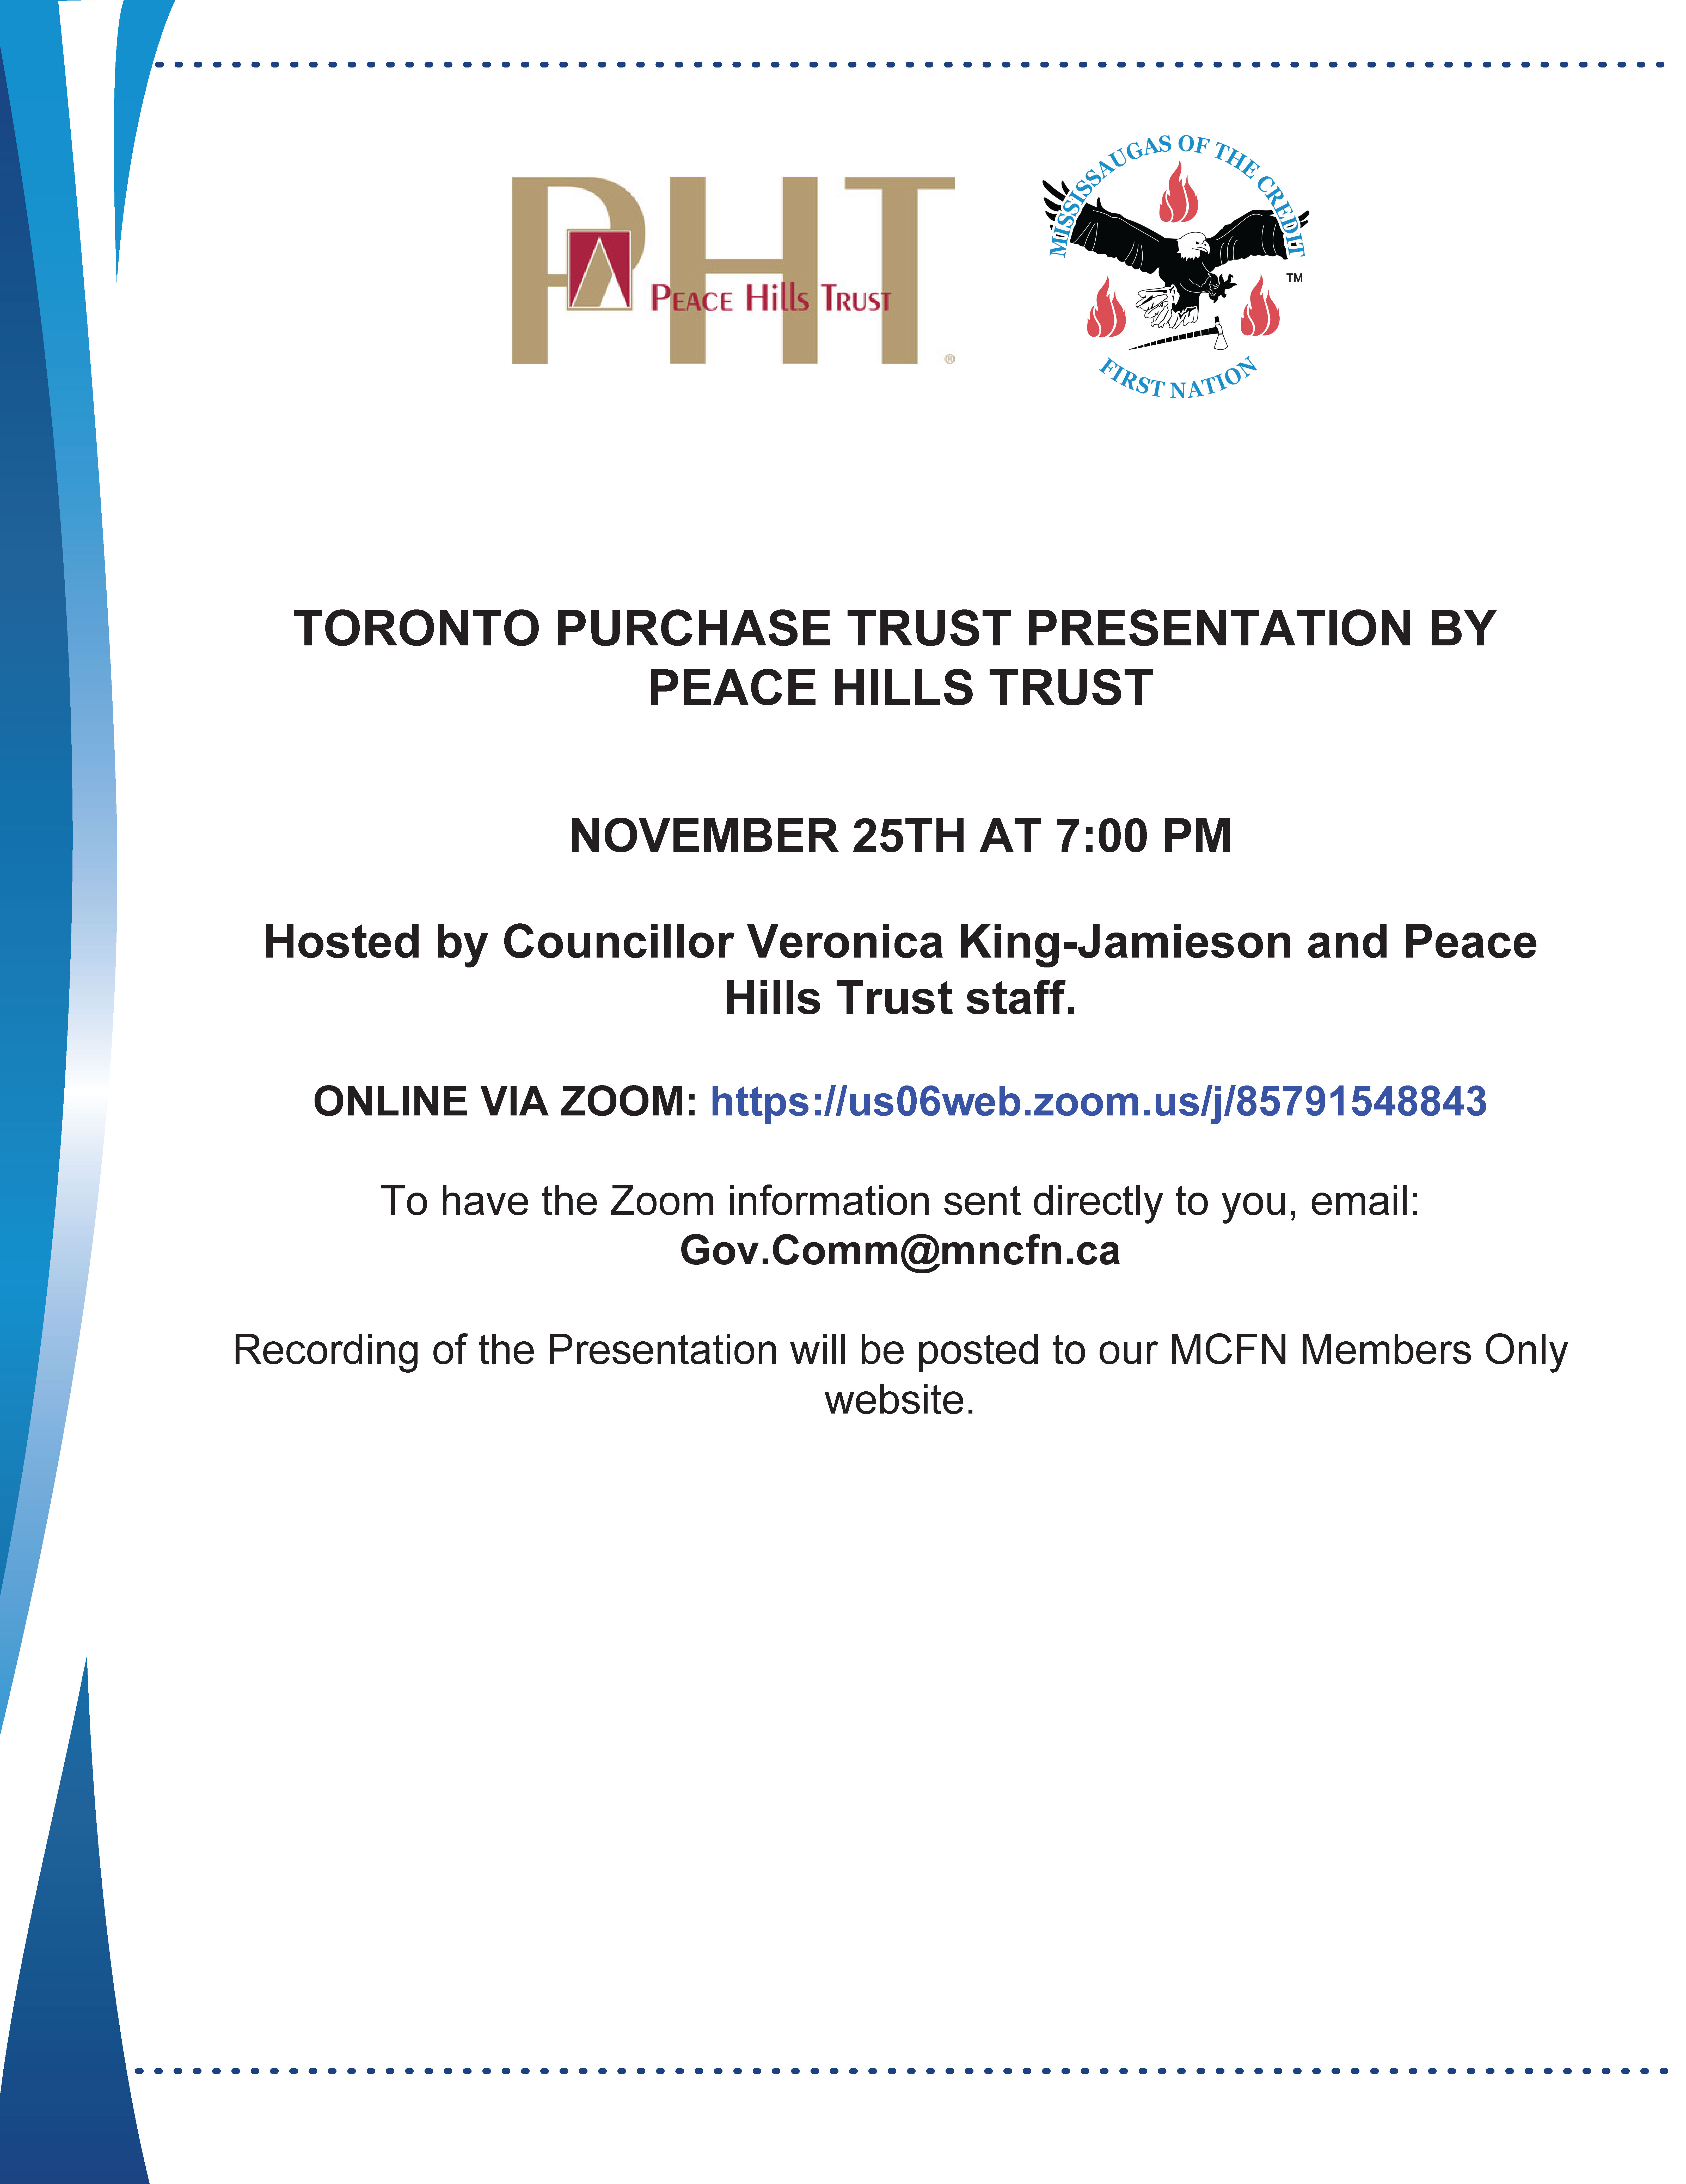 Toronto Purchase Trust - Peace Hills Trust presentation